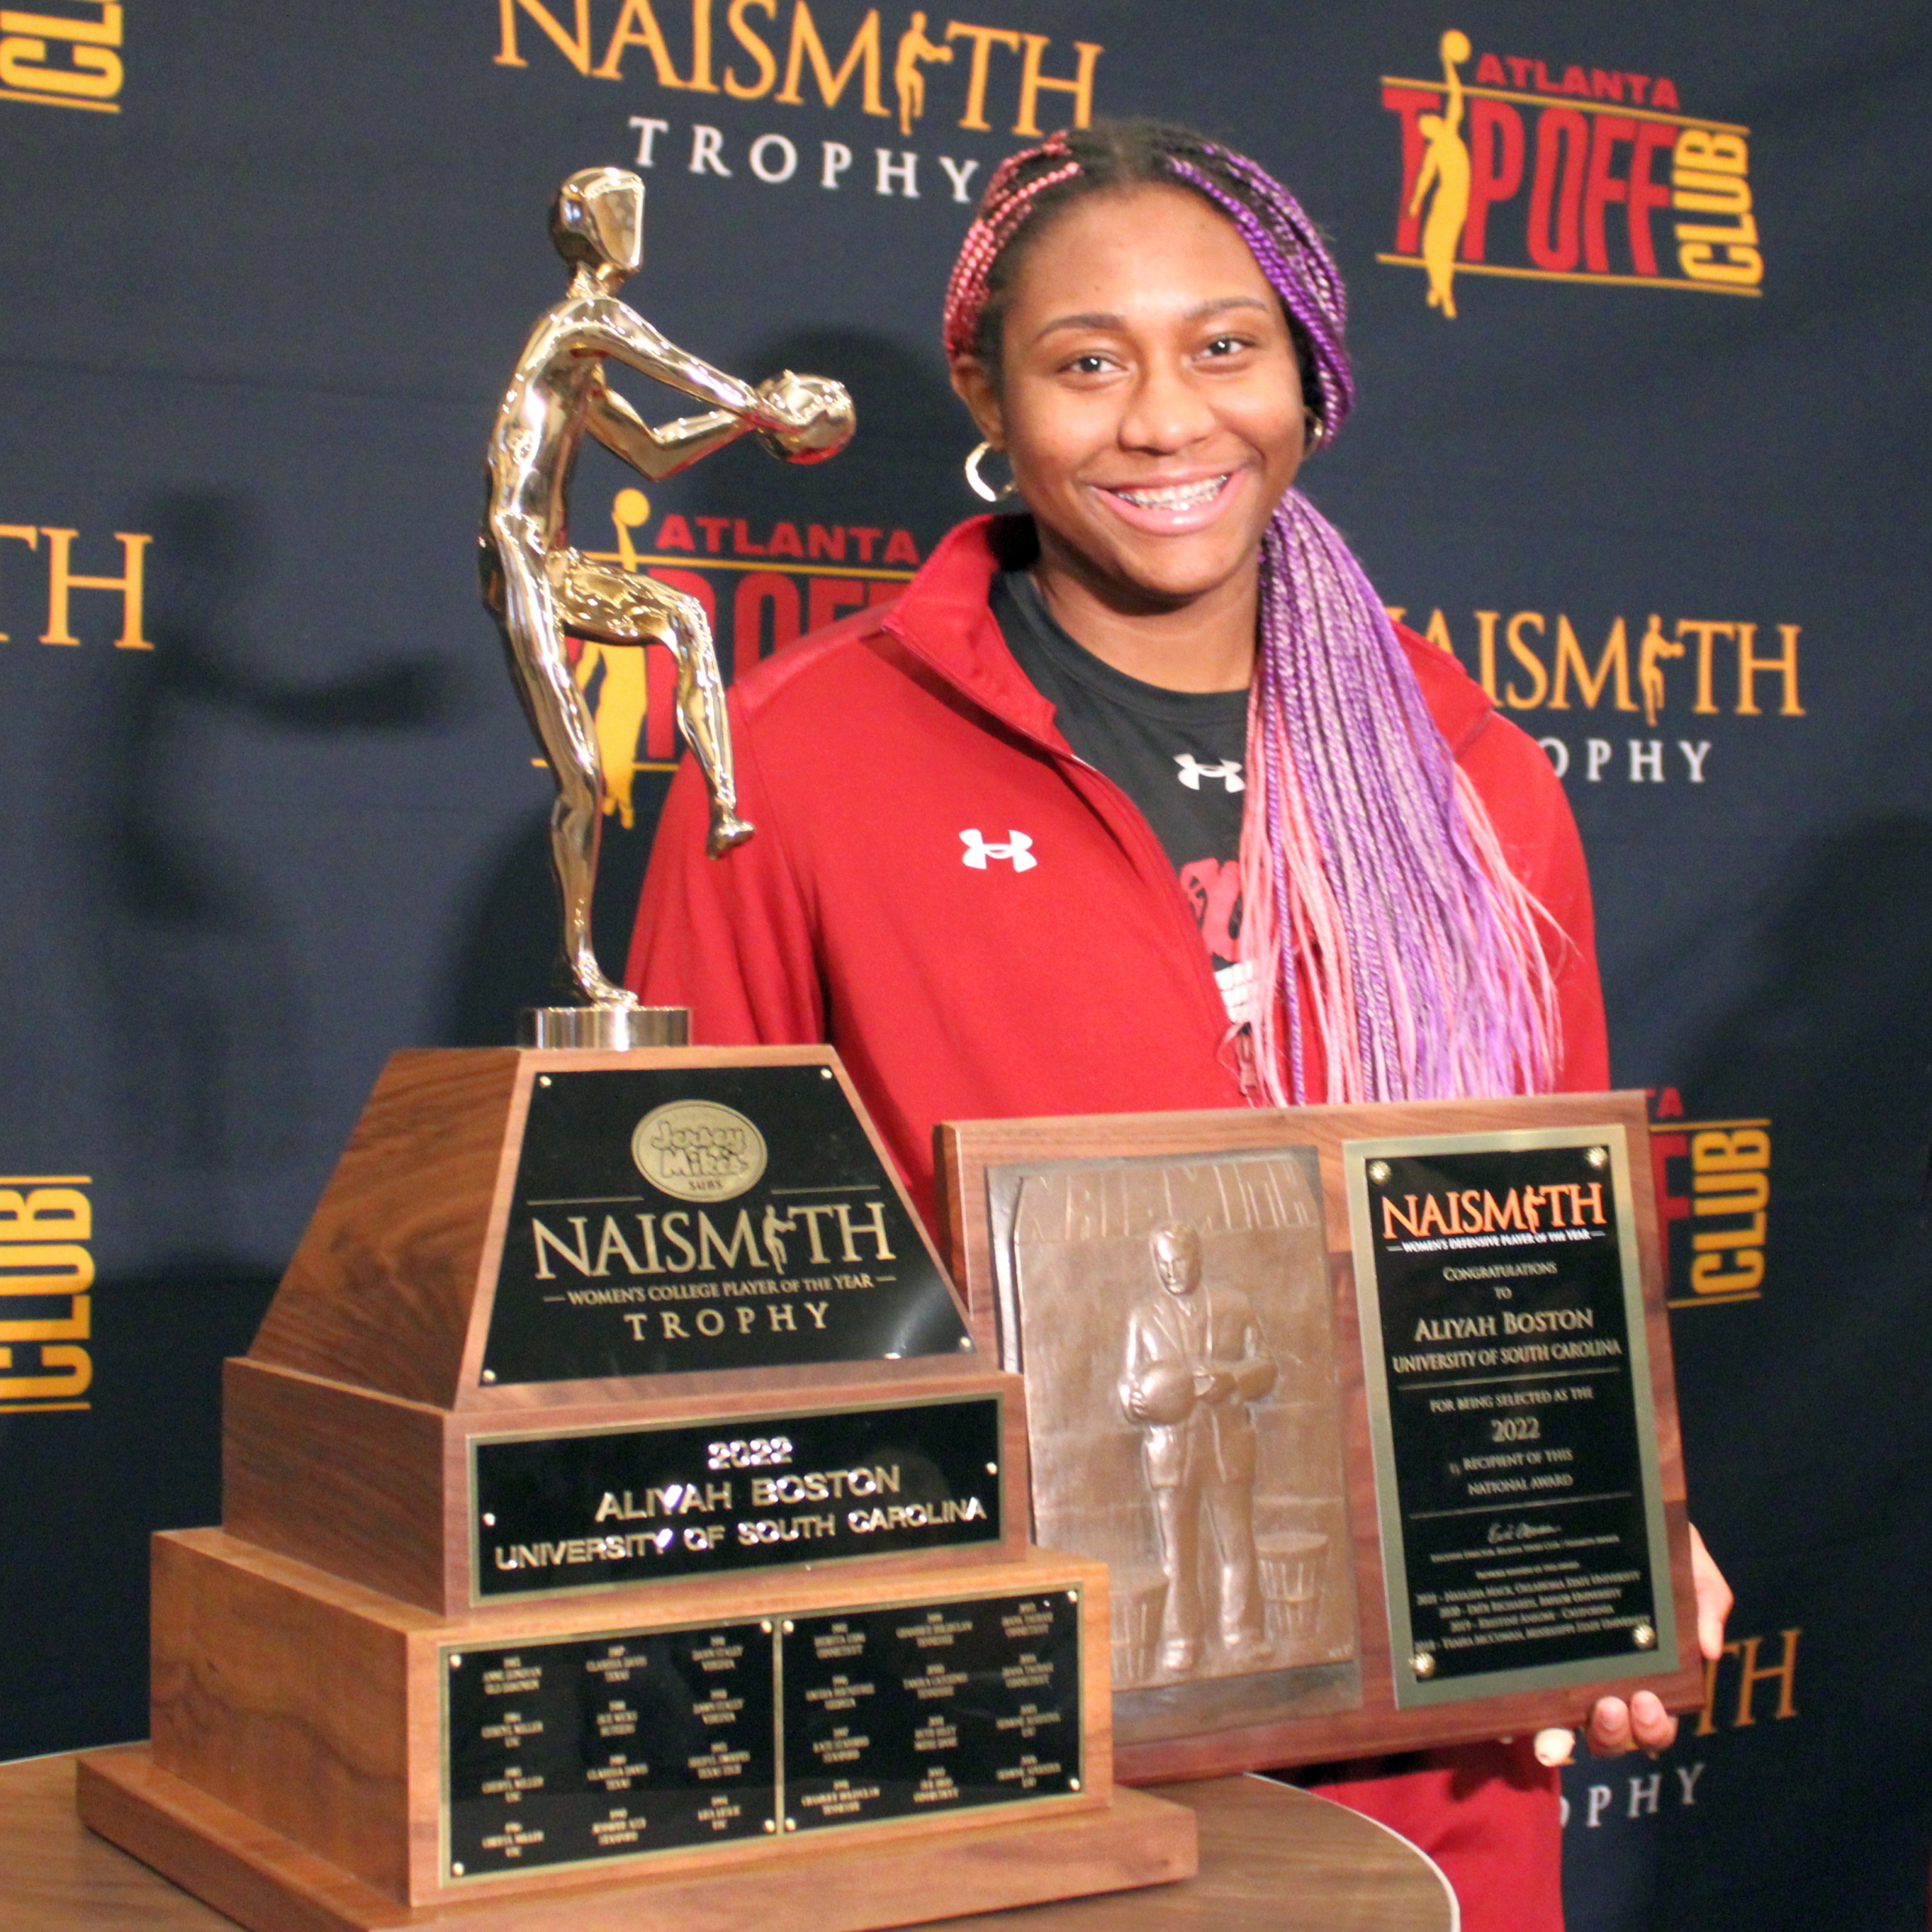 South Carolina sweeps Naismith honors, Staley also earns USBWA award